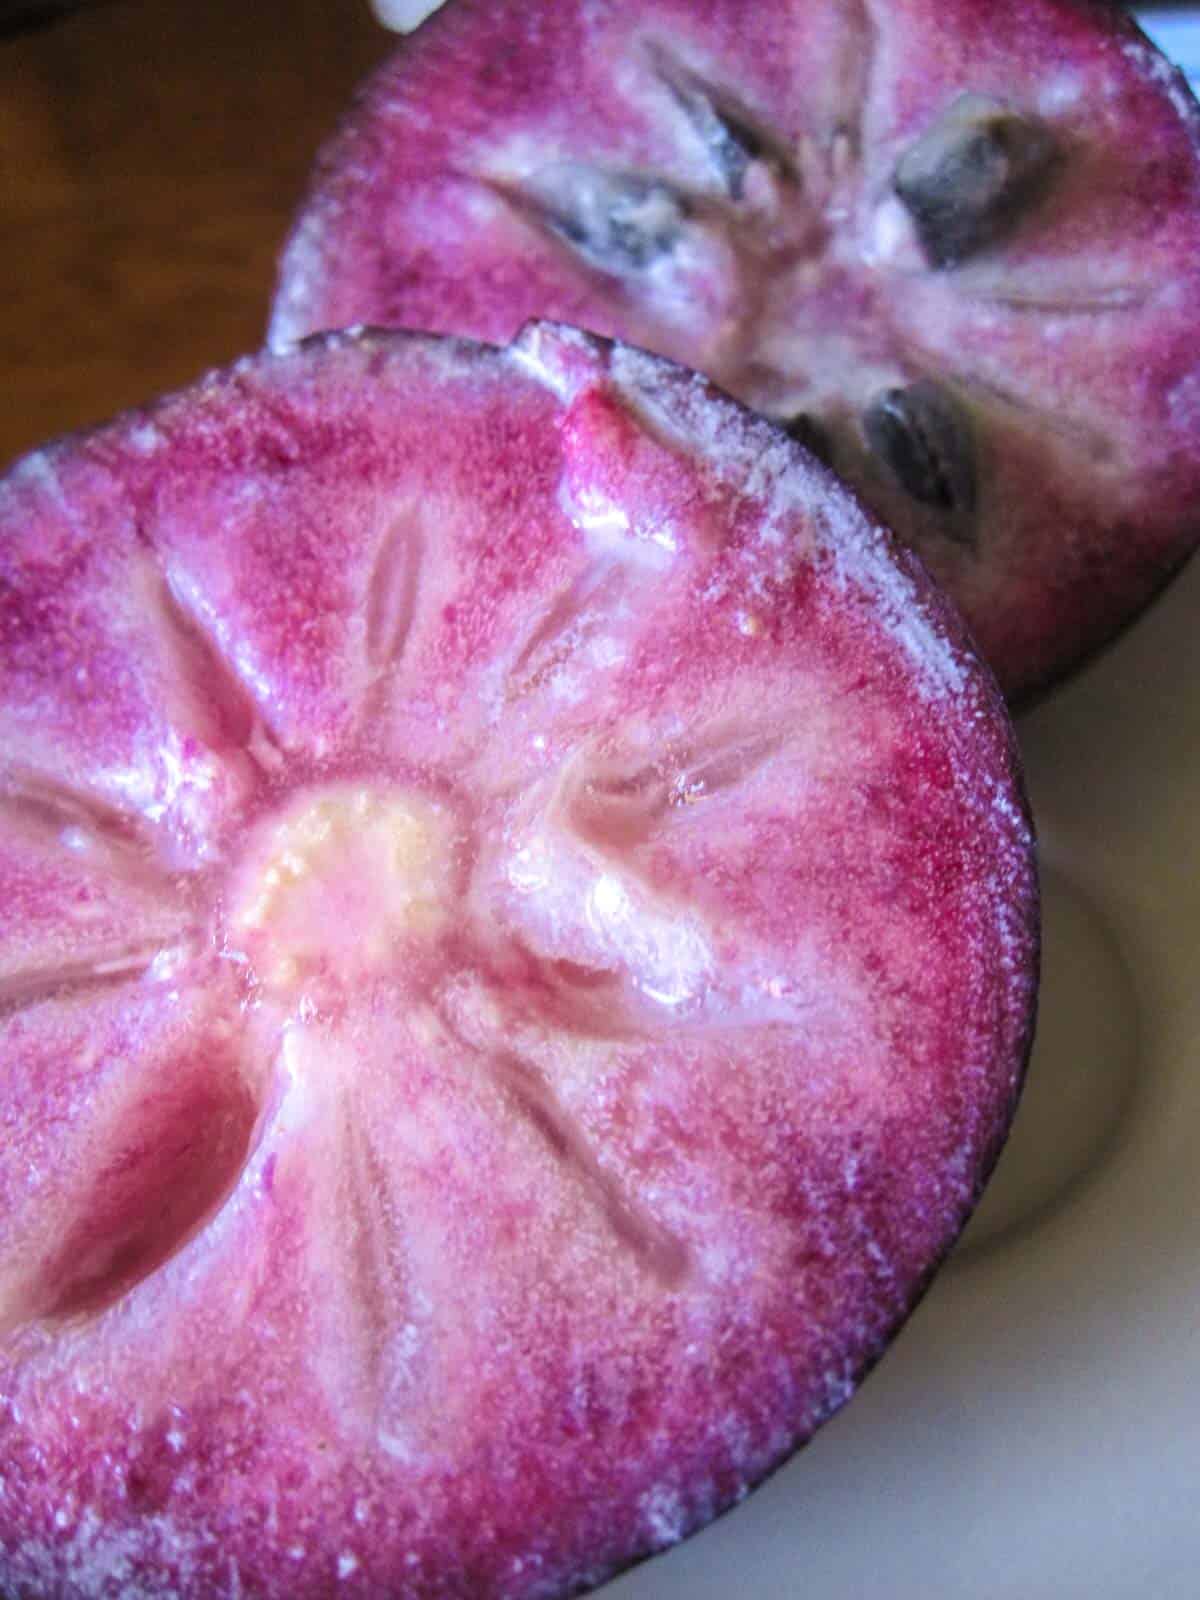 Jamaica fruit called star apple cut in half exposing star like purple flesh.